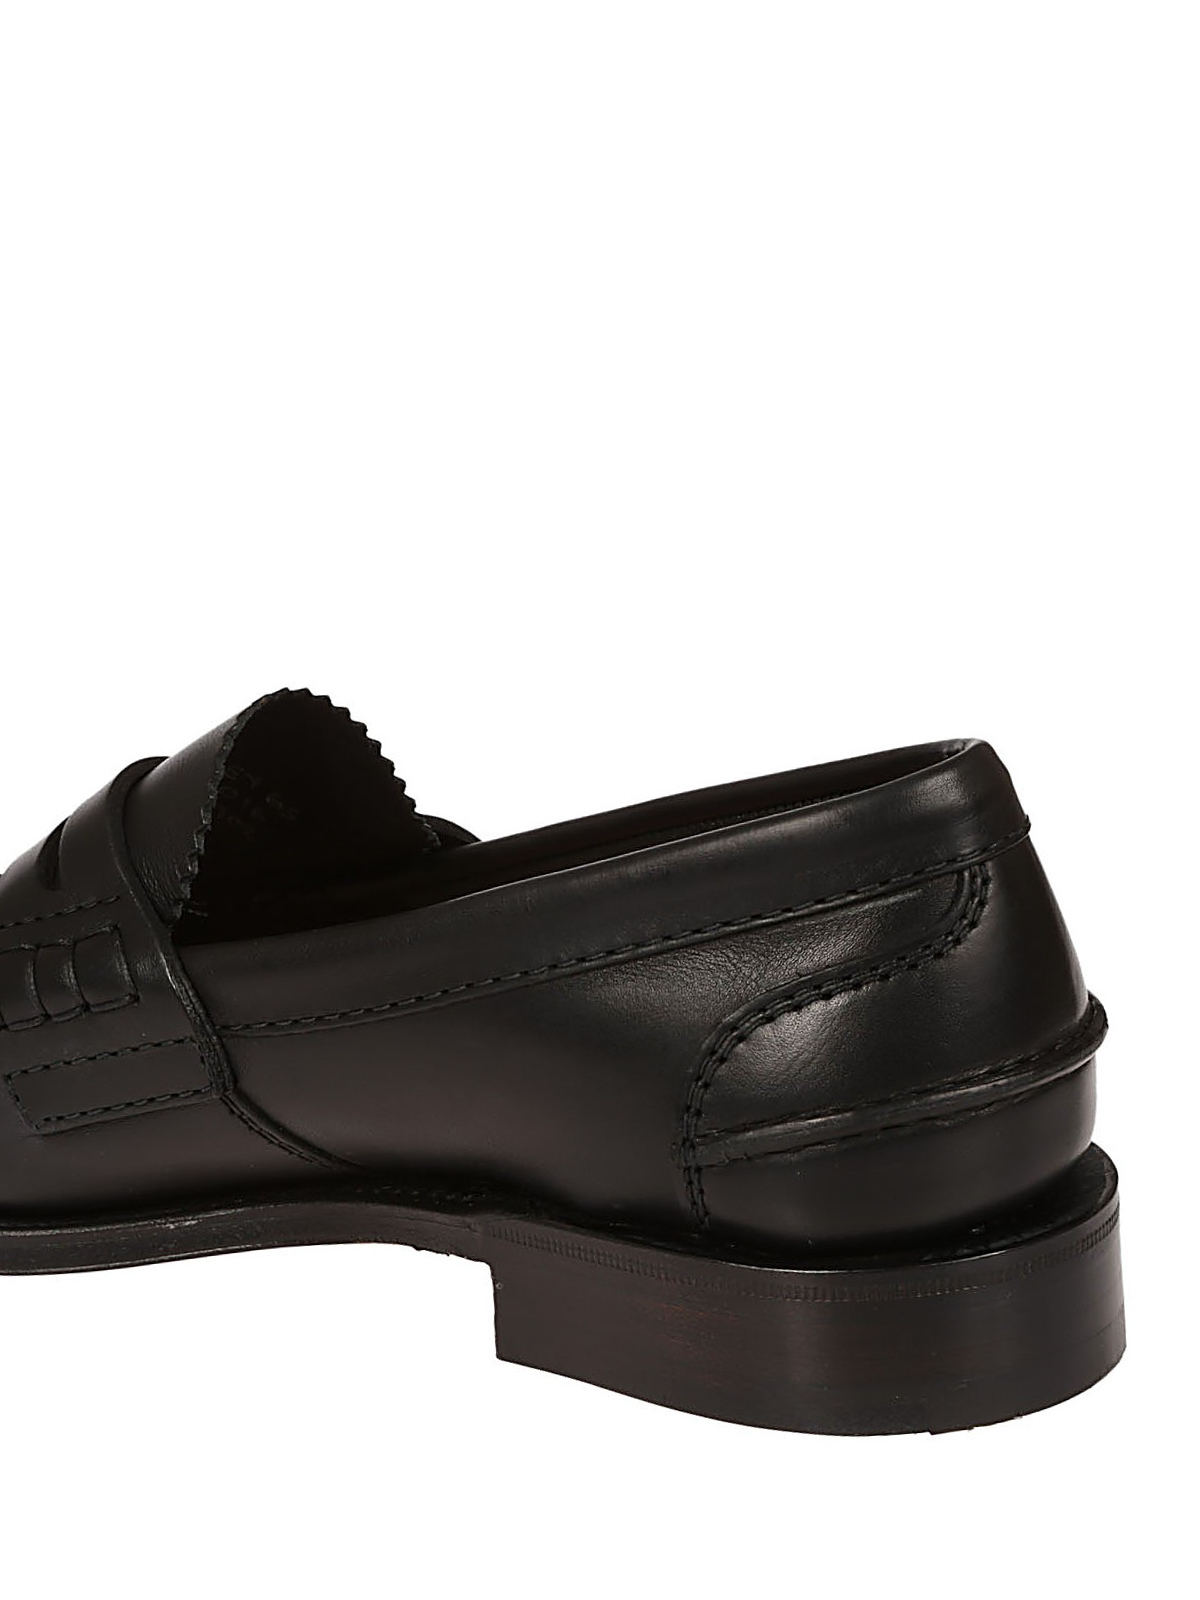 Shop Church's Pembrey Black Leather Loafers